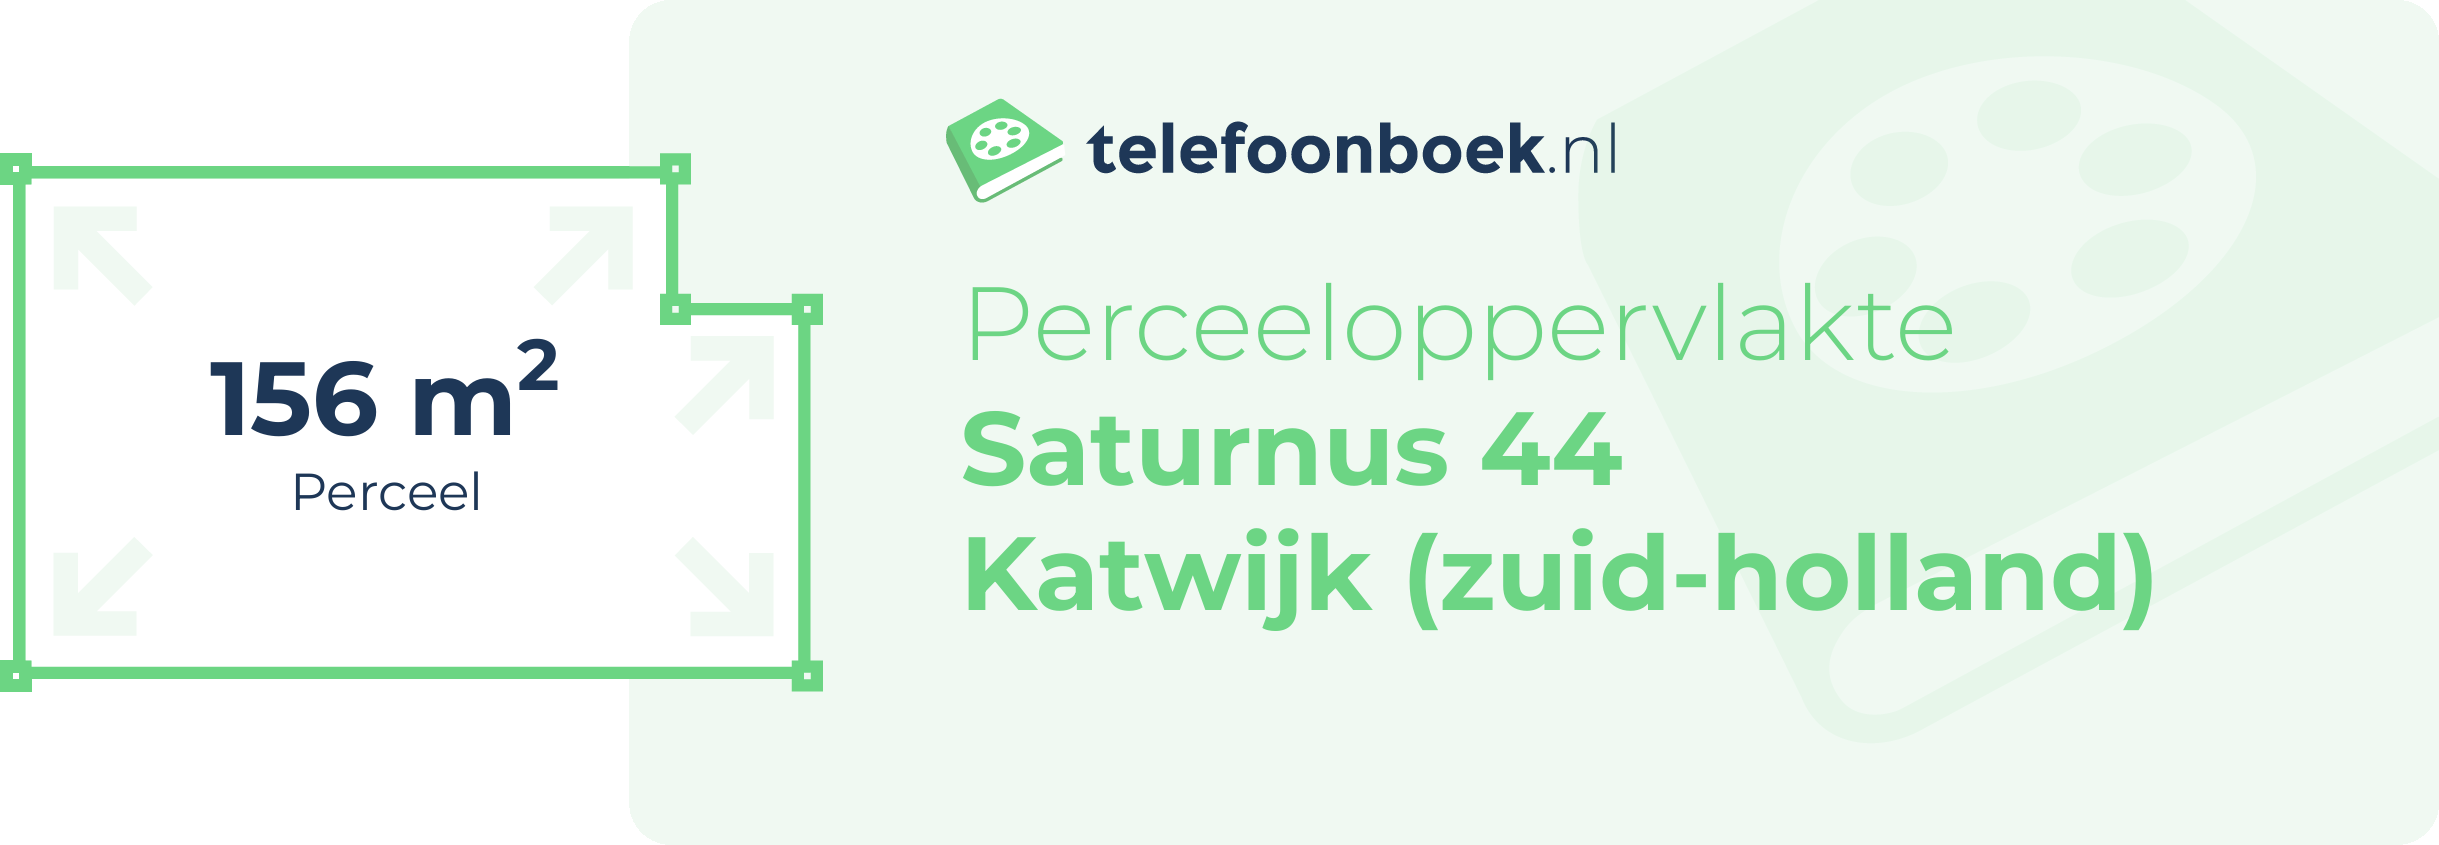 Perceeloppervlakte Saturnus 44 Katwijk (Zuid-Holland)